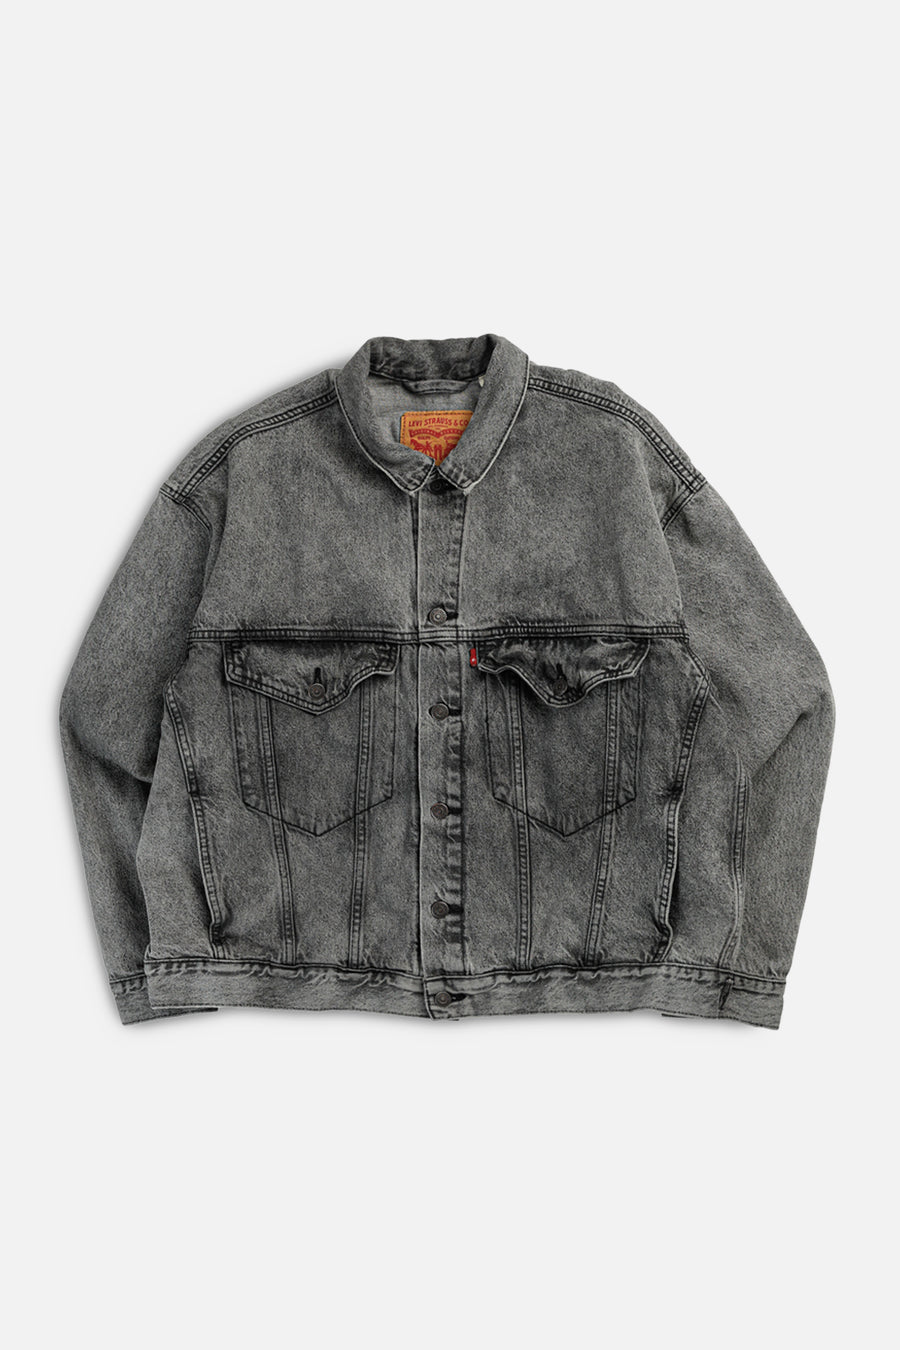 Vintage Levi's Denim Jacket - L